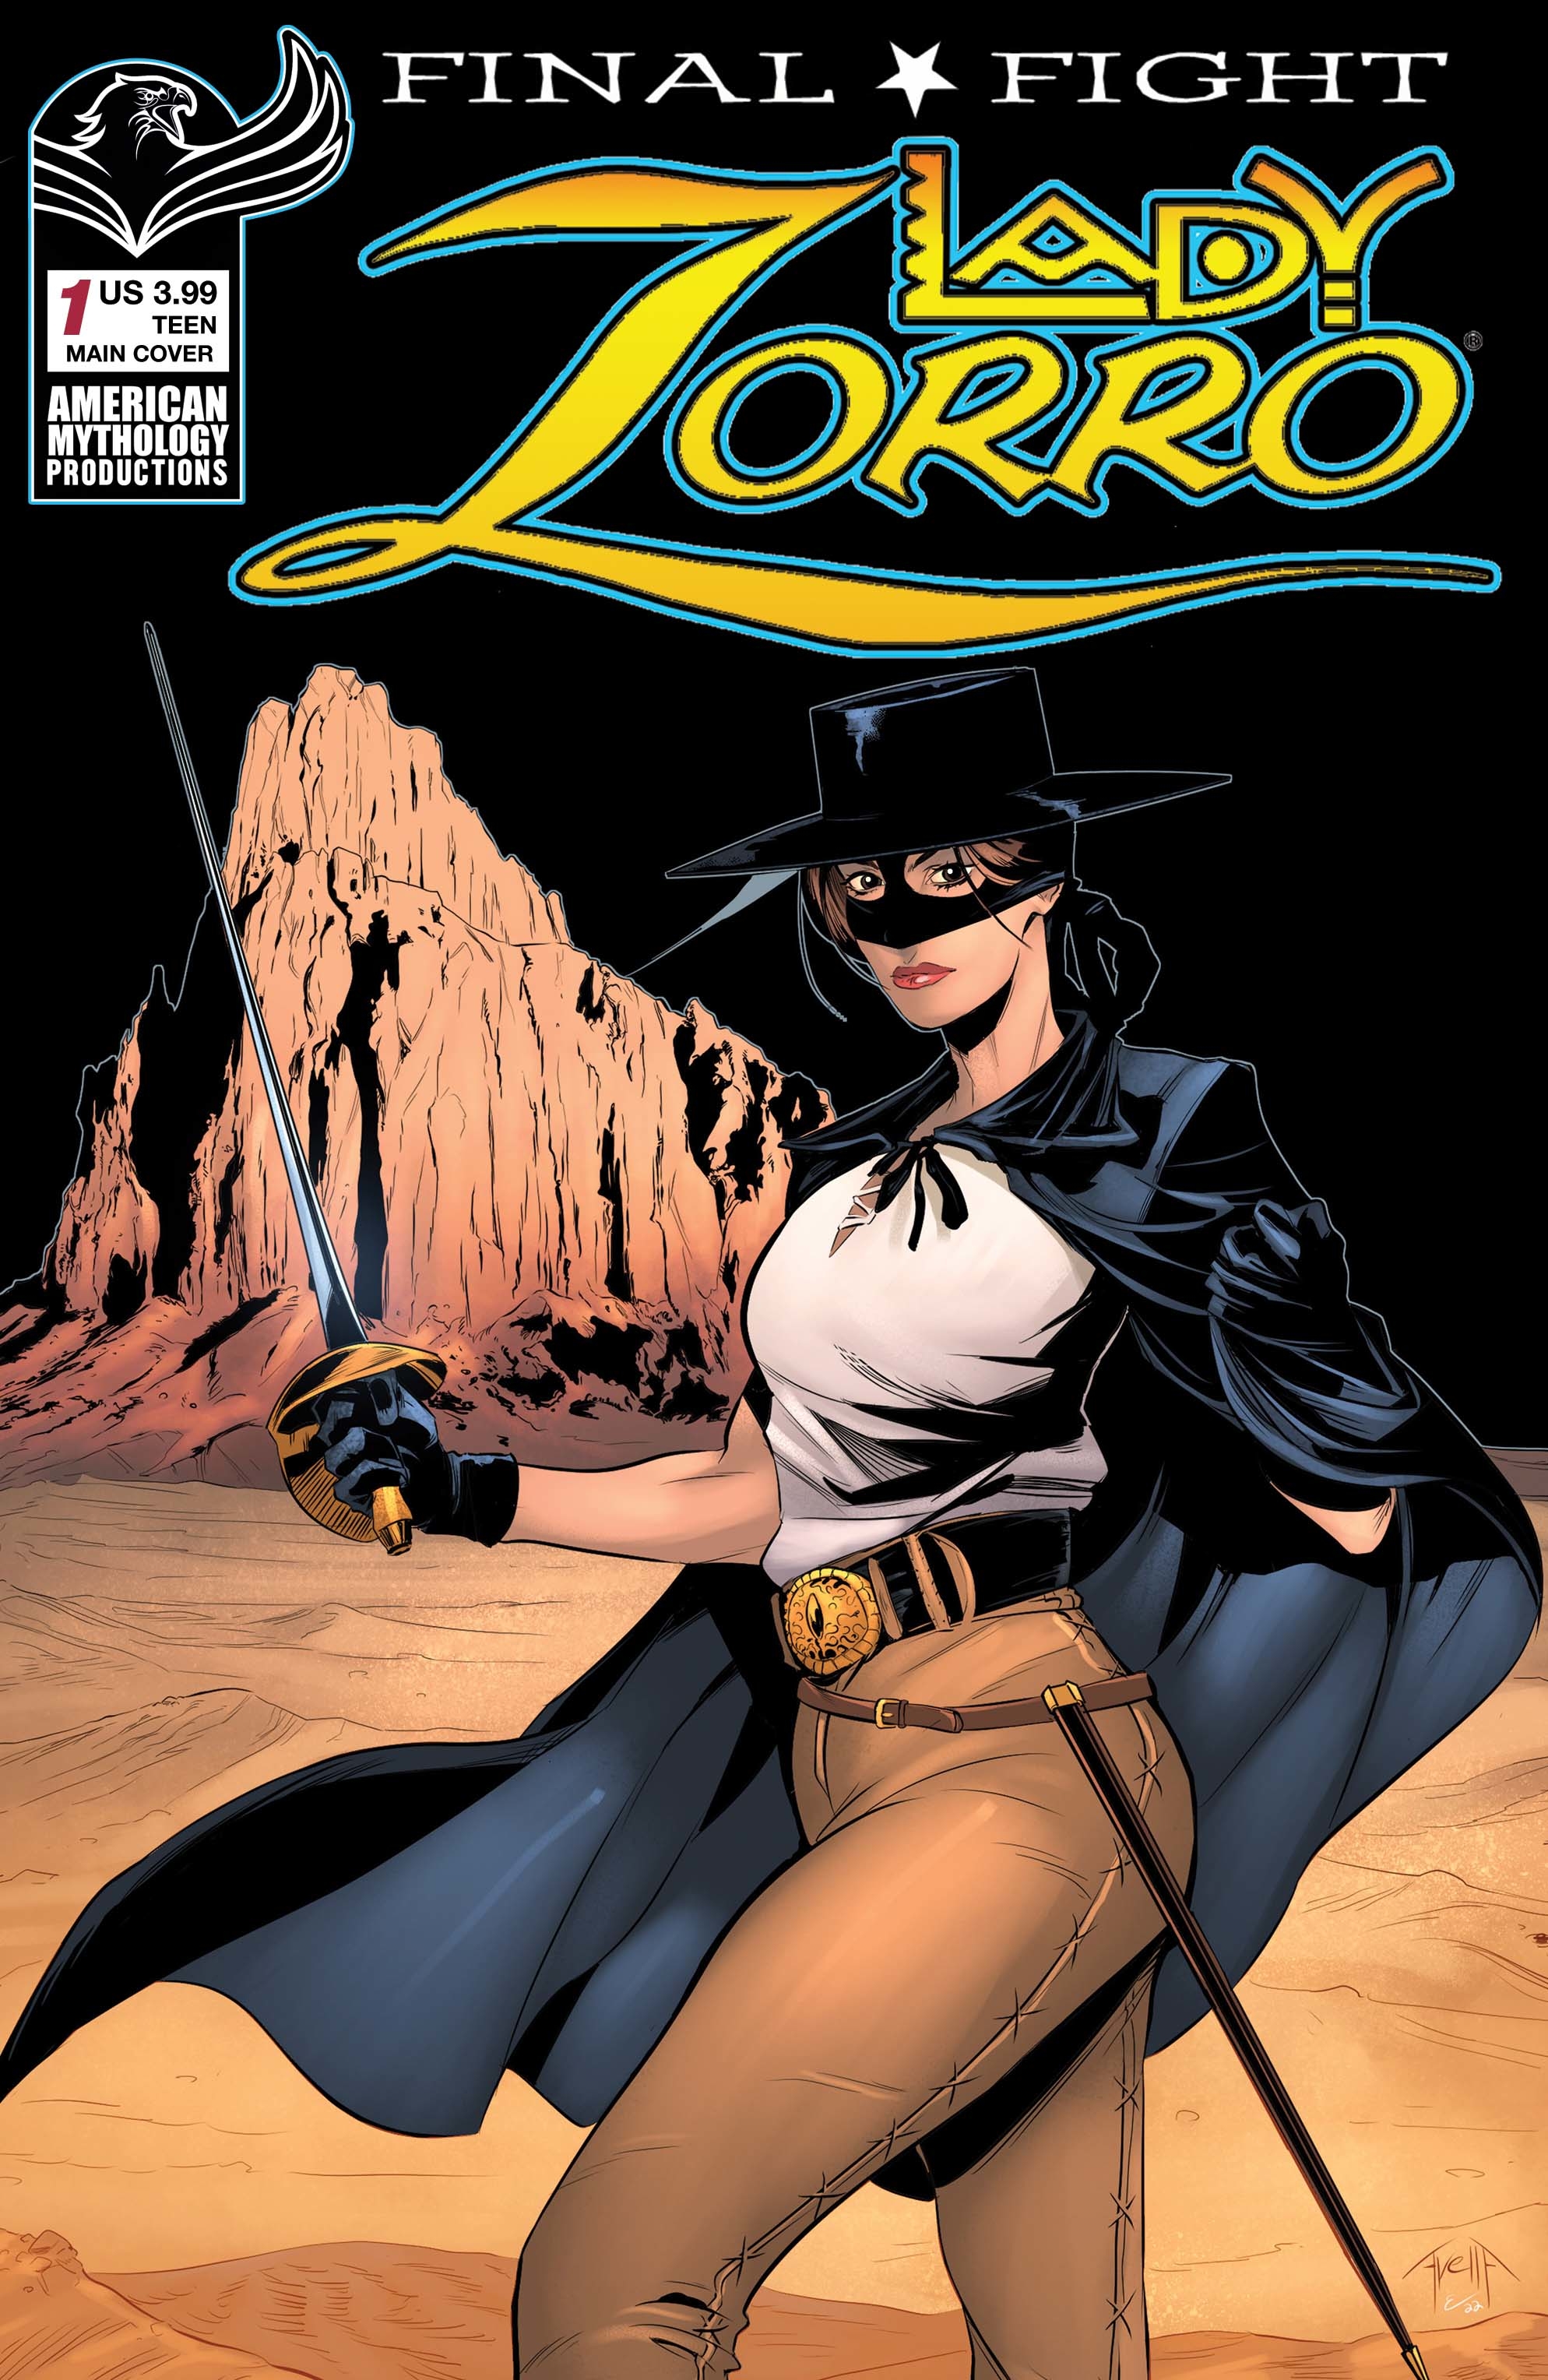 Lady Zorro Final Flight #1 Cover A Avella Main